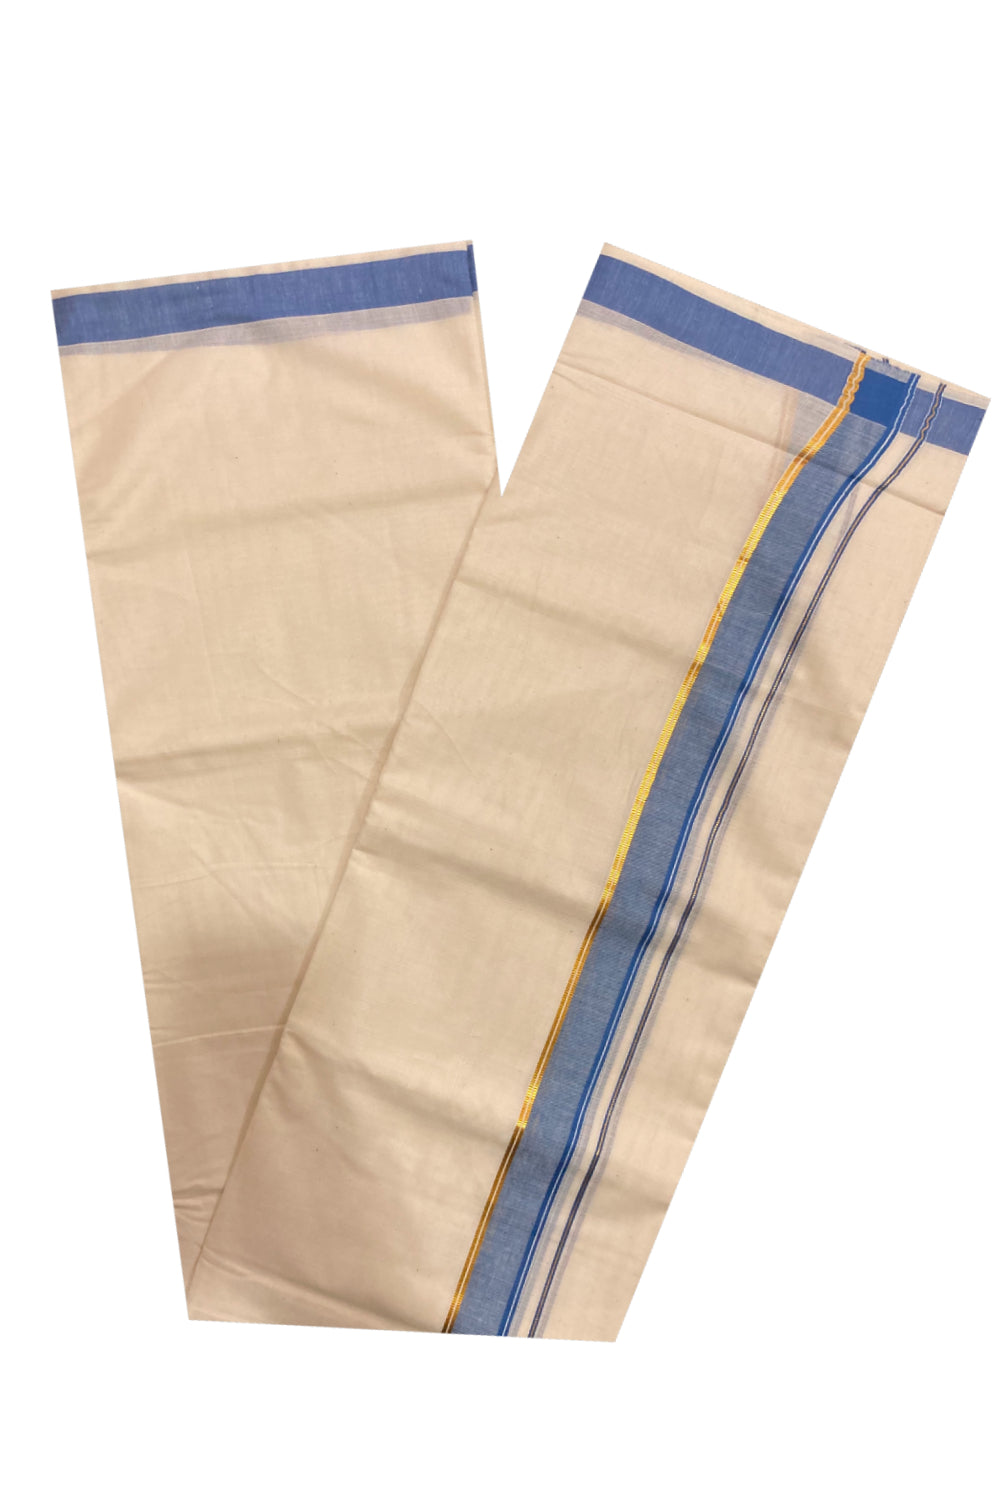 Pure Cotton Double Mundu with Blue and Kasavu Border (South Indian Dhoti)